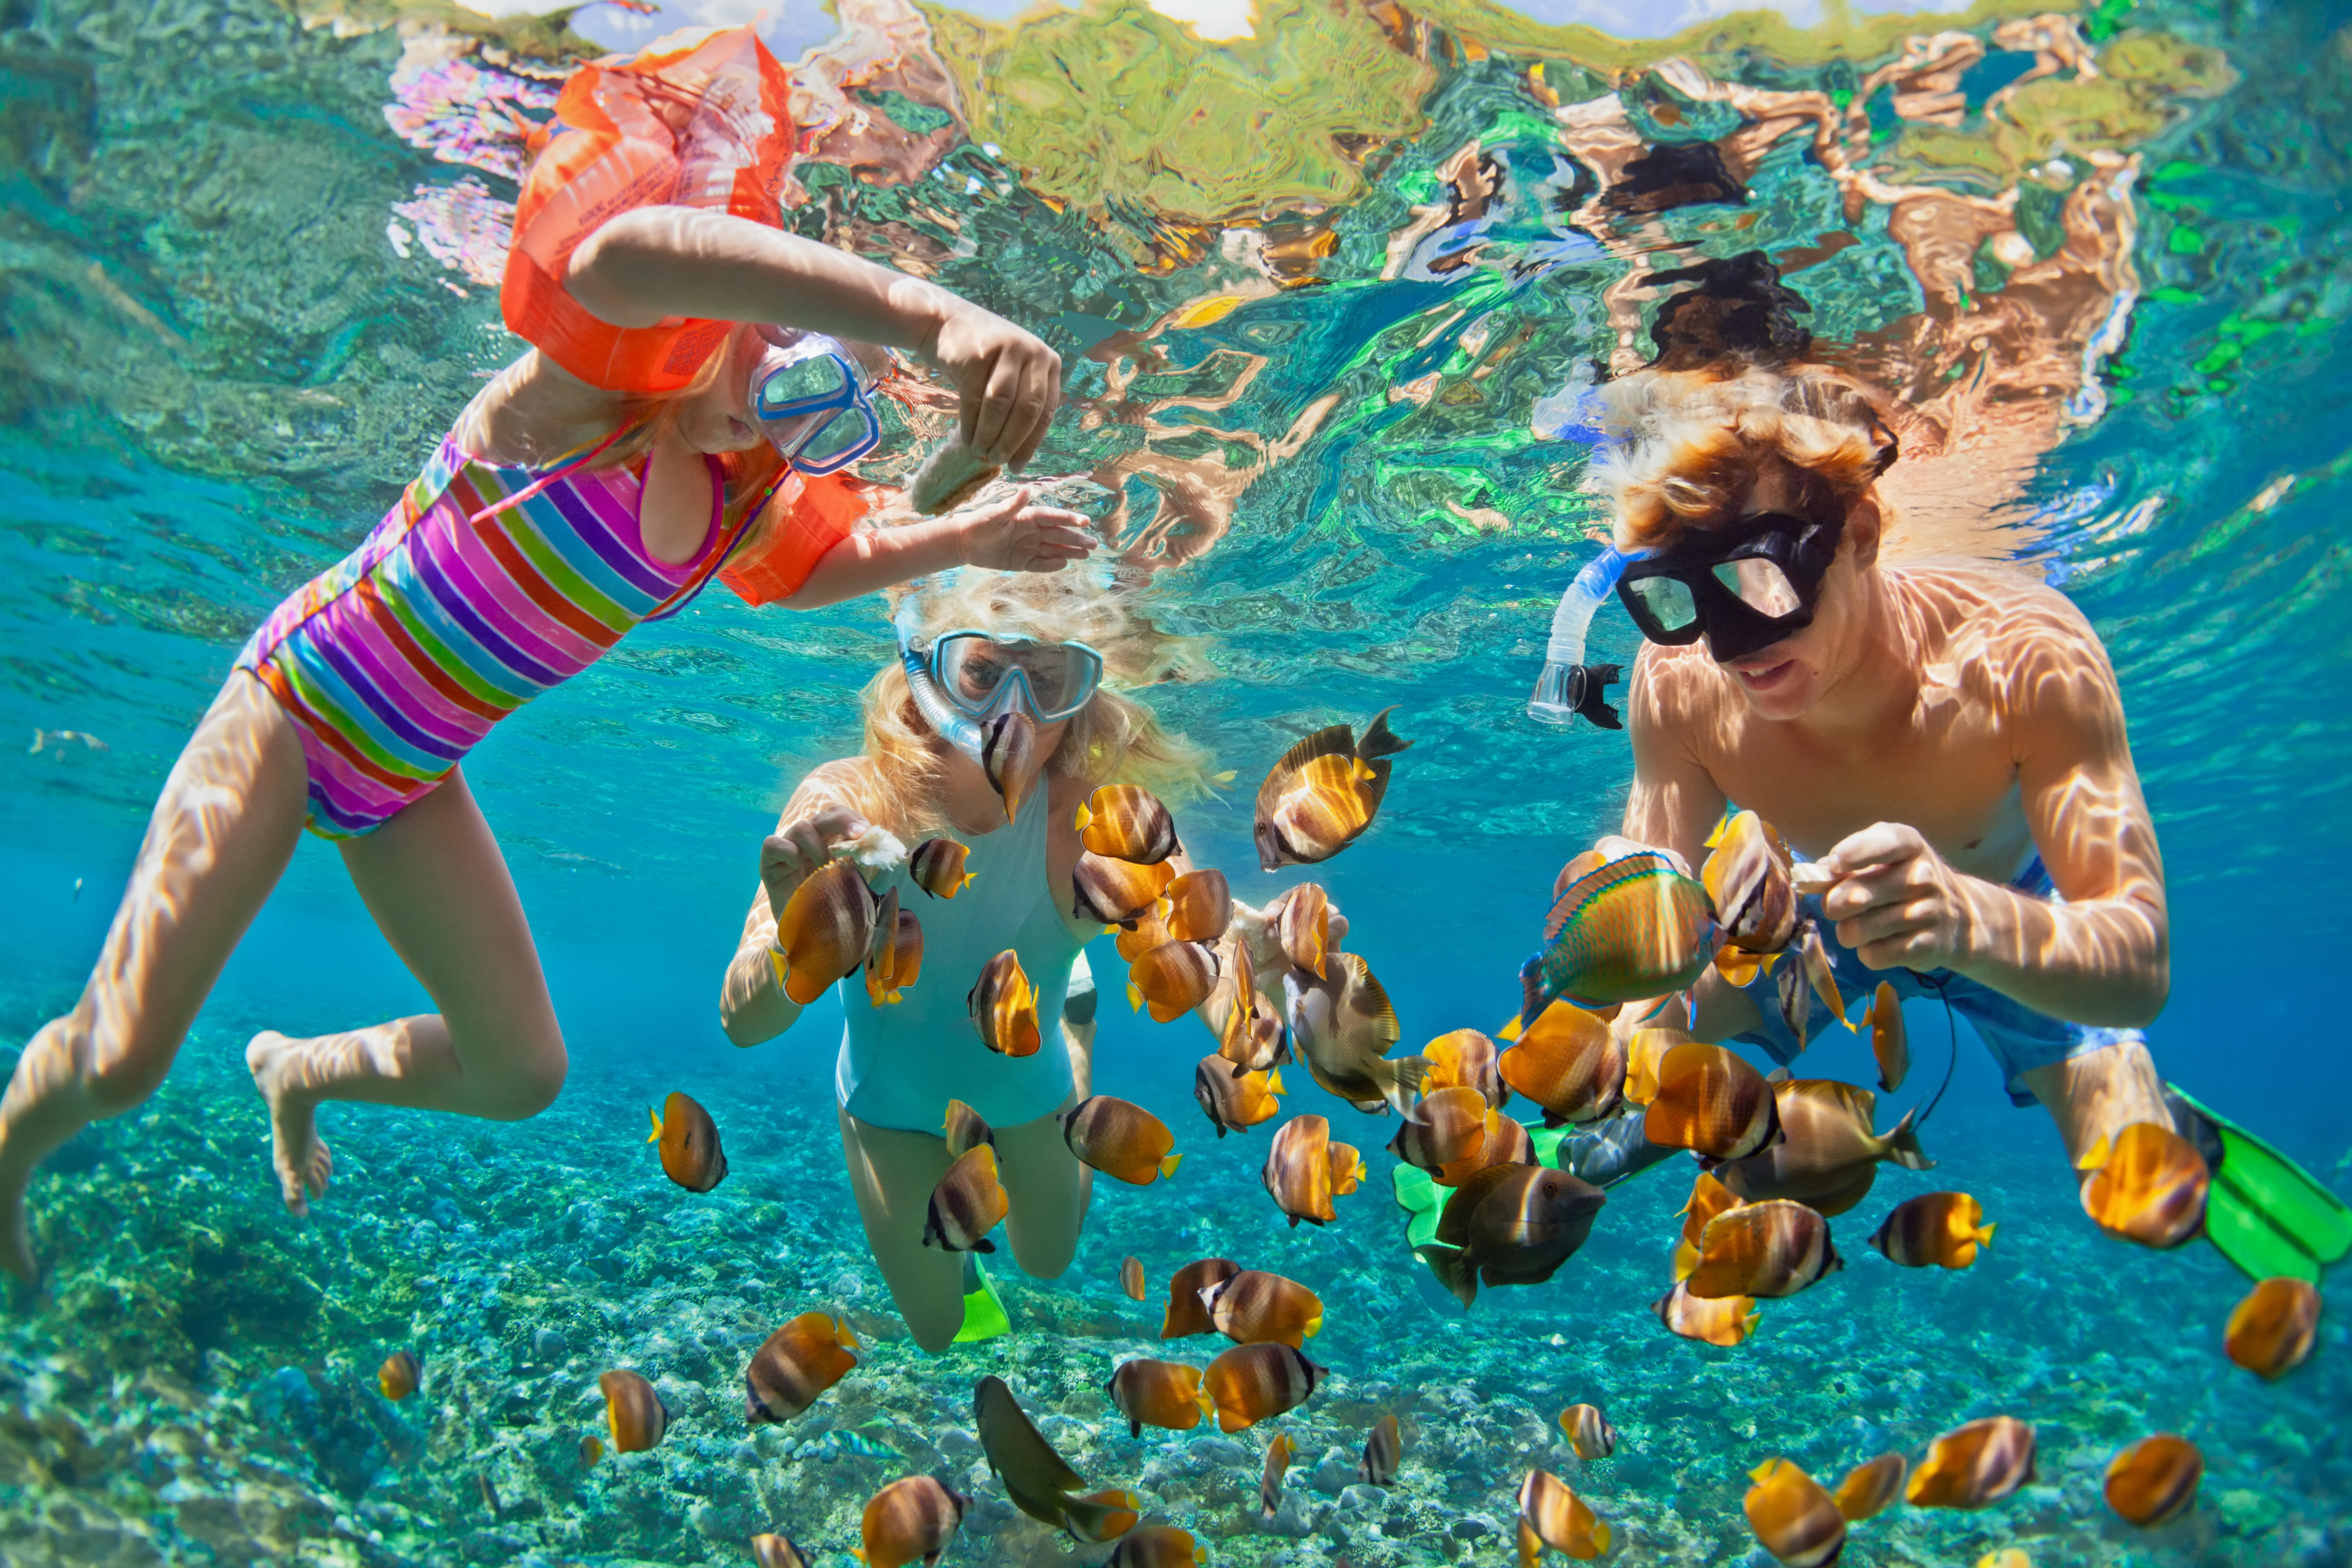 Hop on a fun snorkeling experience at Pulau Kentut